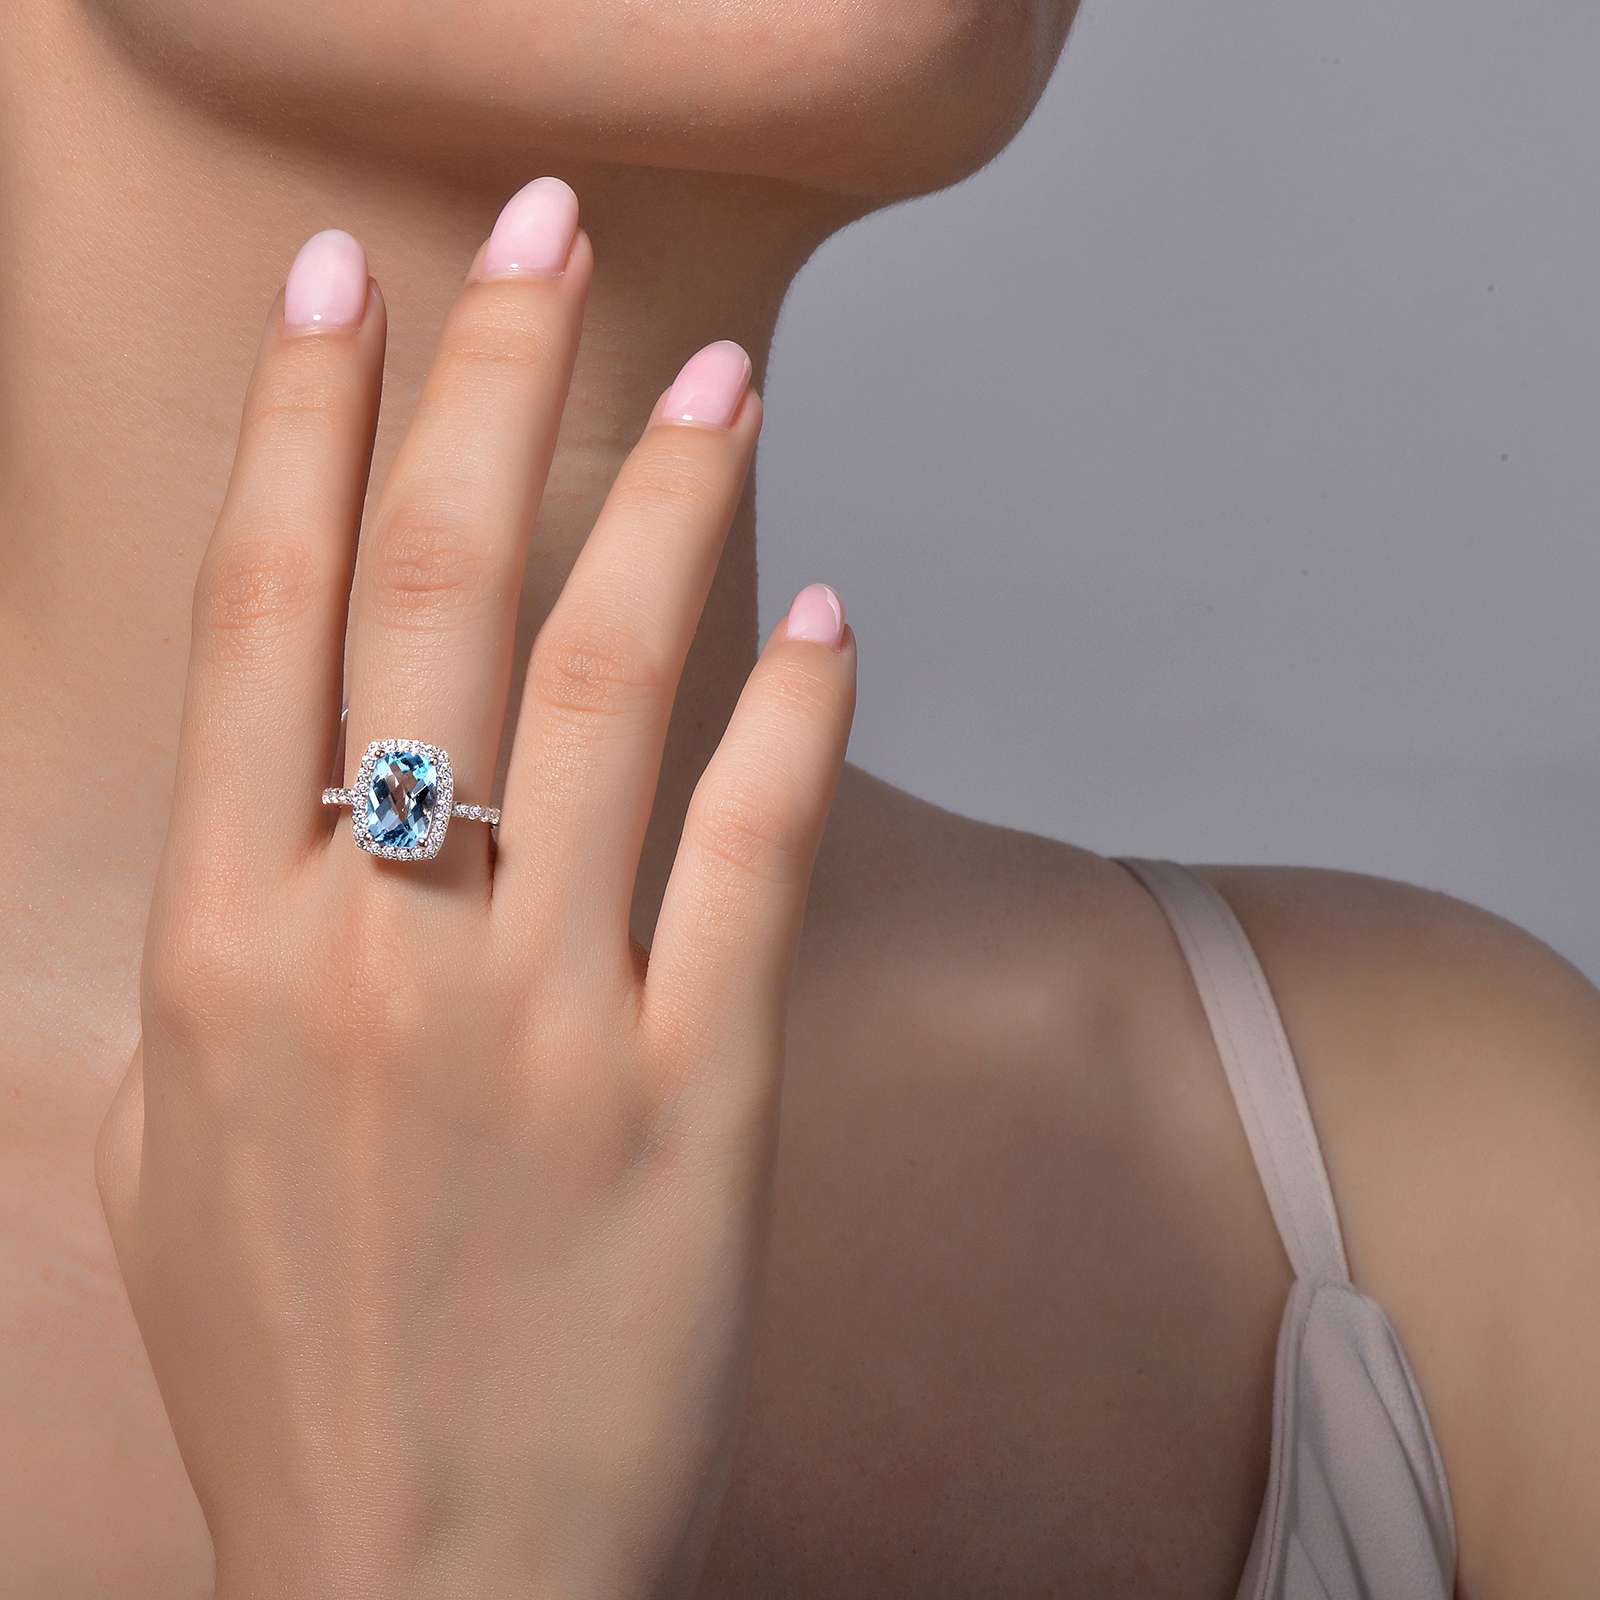 Genuine Blue Topaz Halo Ring